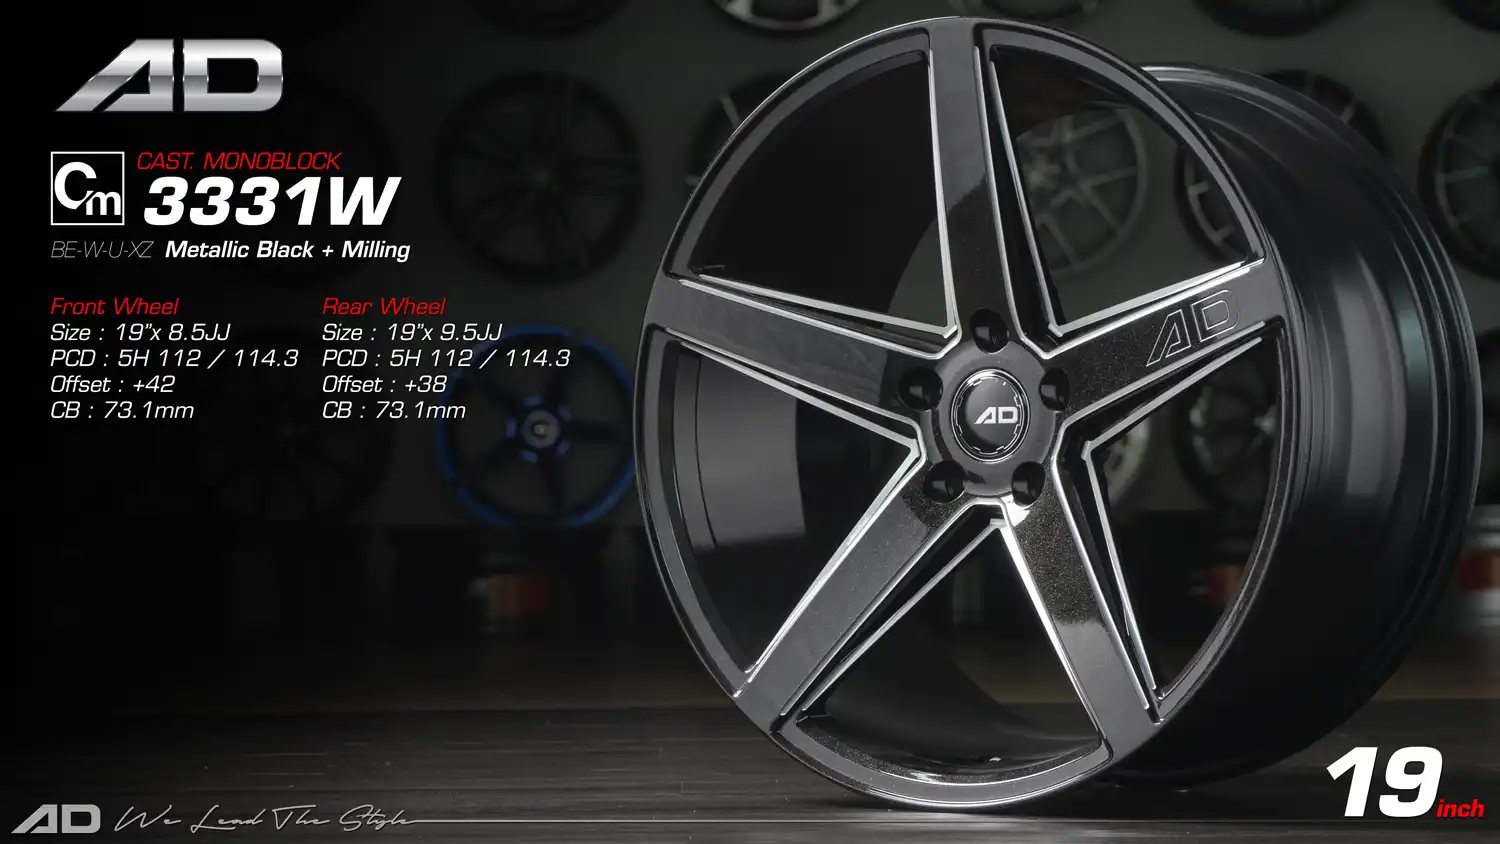 Ad wheels | Cast Monoblock 3331w 19 inch 5H112/114.3